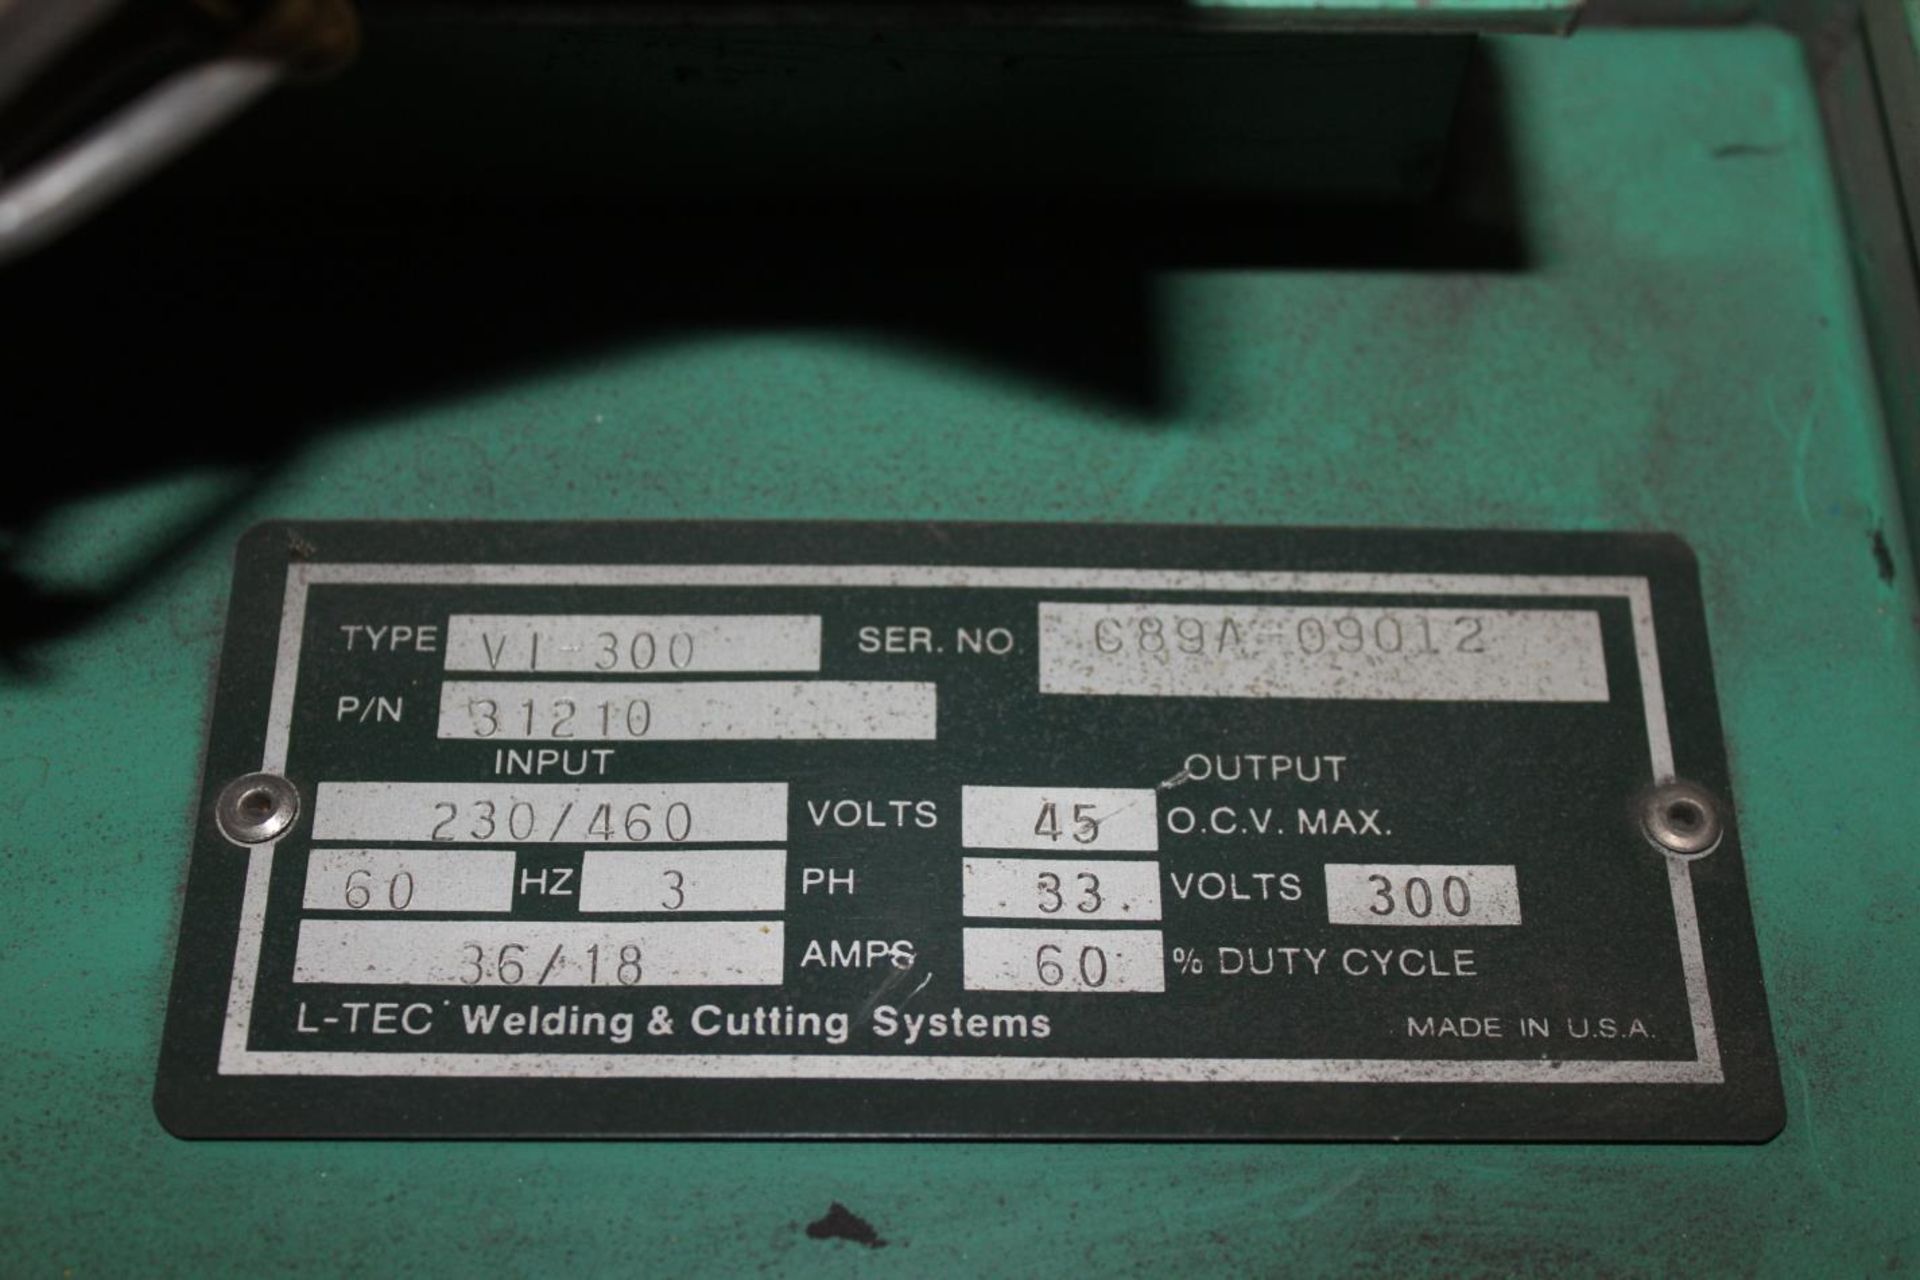 L-TEC VI-300 welder w/ MIG-3IA wire feeder 230/460/3ph, Type: VI-300, P/N31210, Ser. 689A-09012 - Image 5 of 6